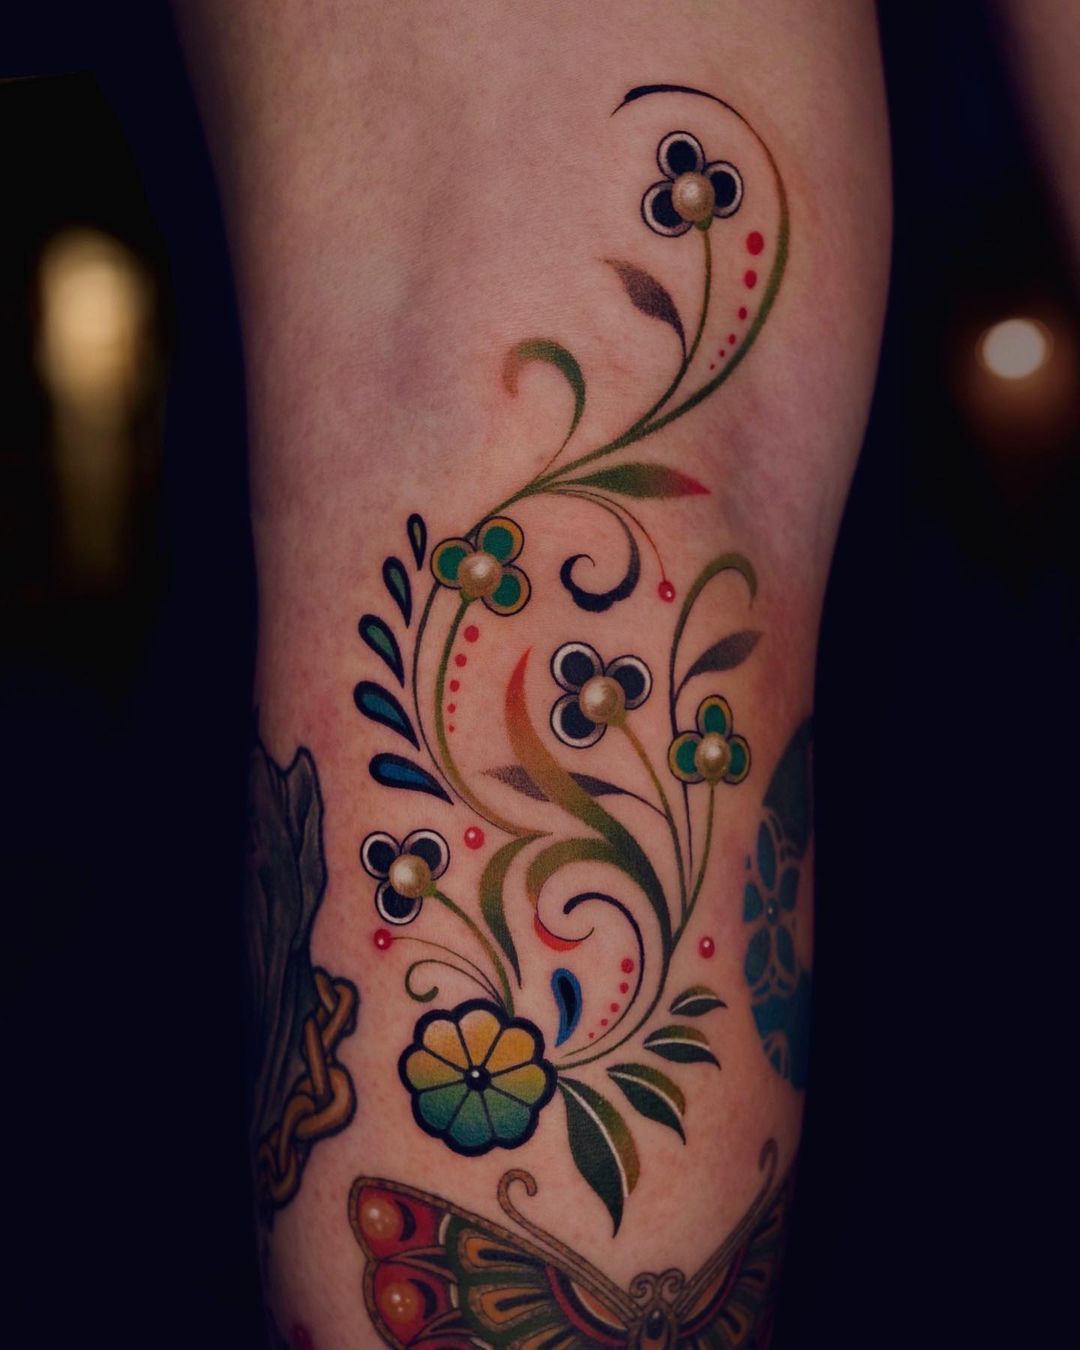 Rosemaling Tattoo  Tattoo ideas  rosemaling tattoo  Norwegian tattoo  Creative tattoos Tattoos